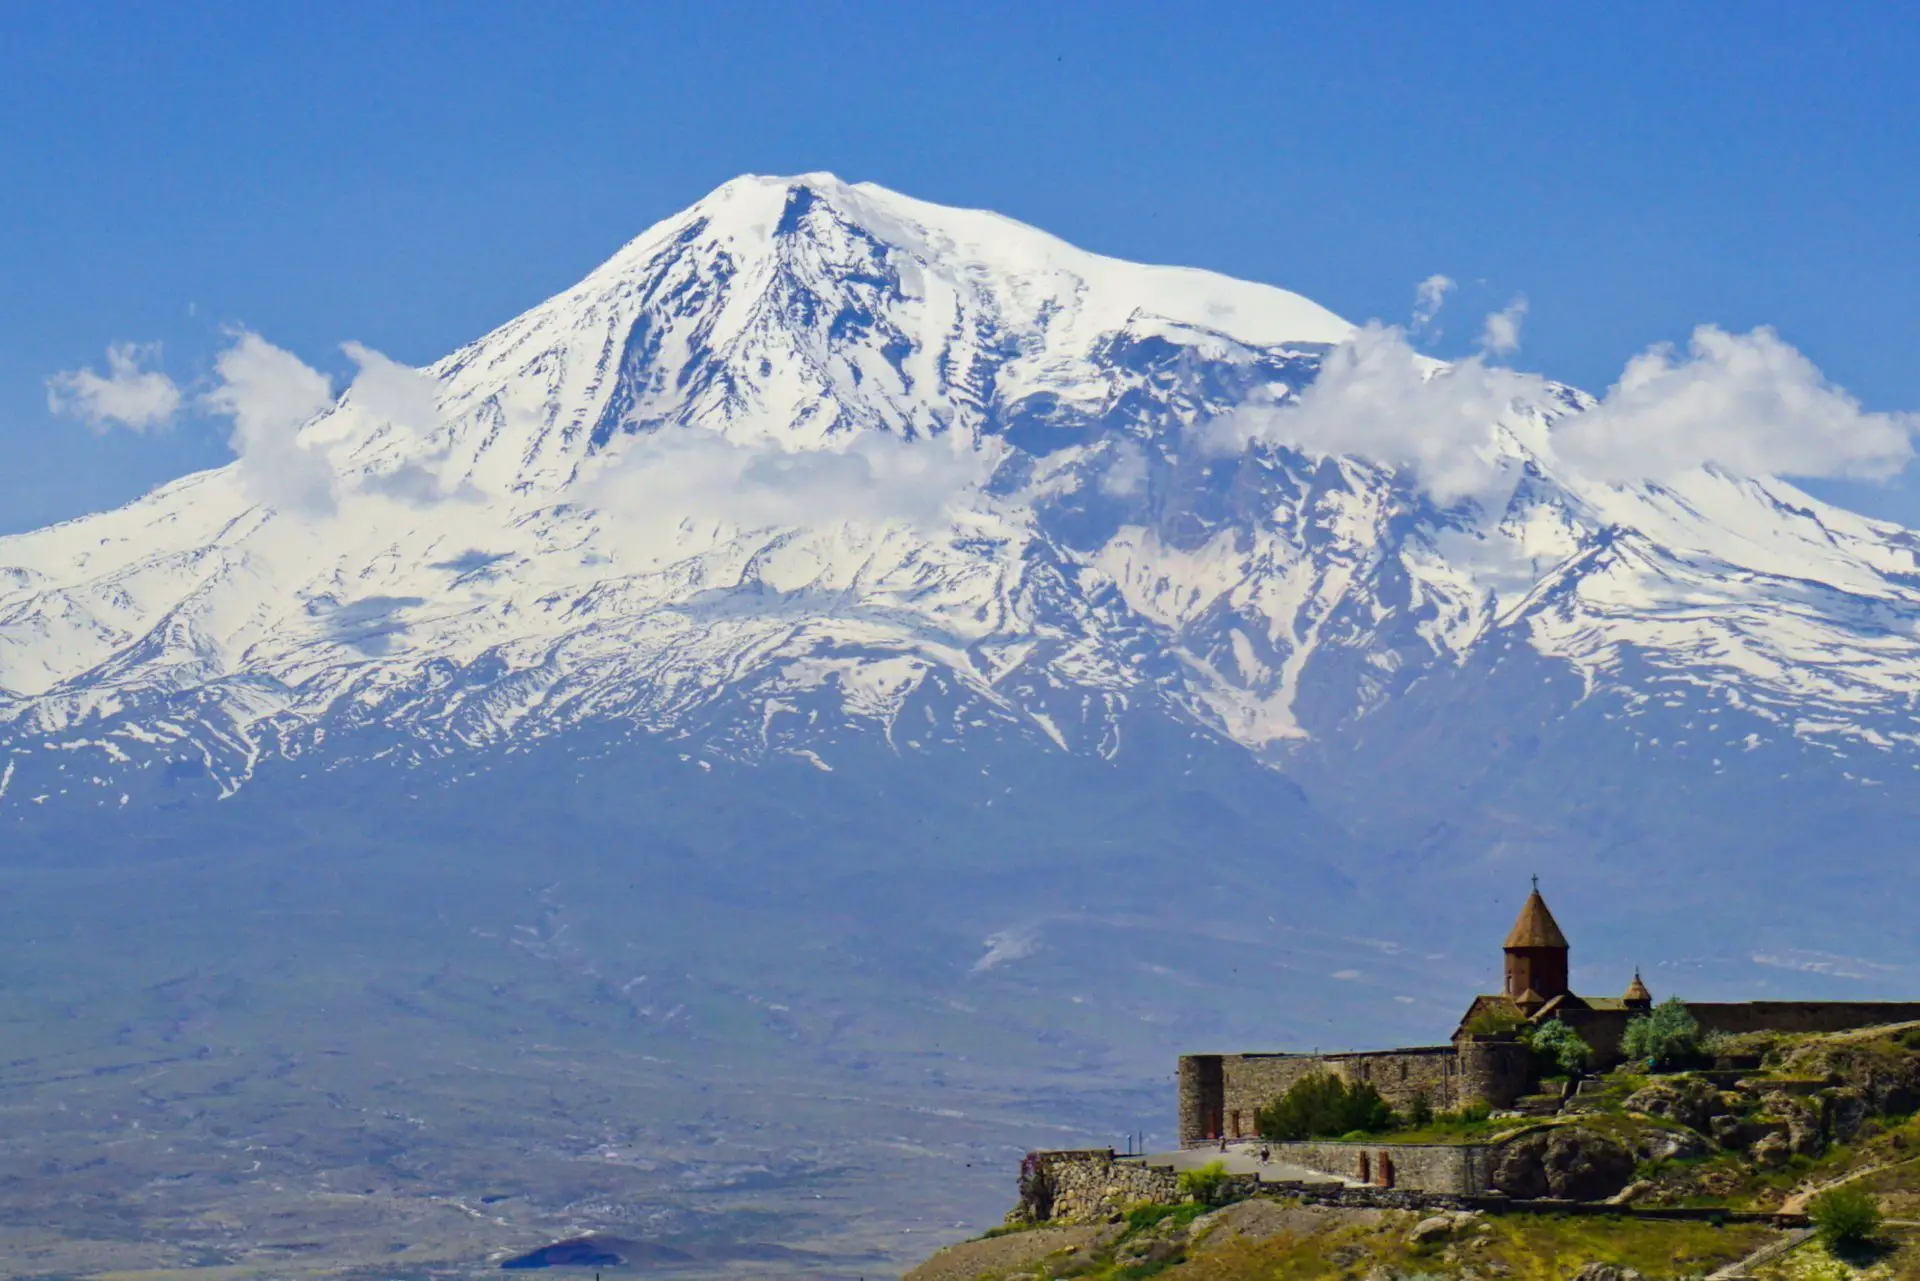 Khor Virap monastery, Armenia - Experiencing the Globe